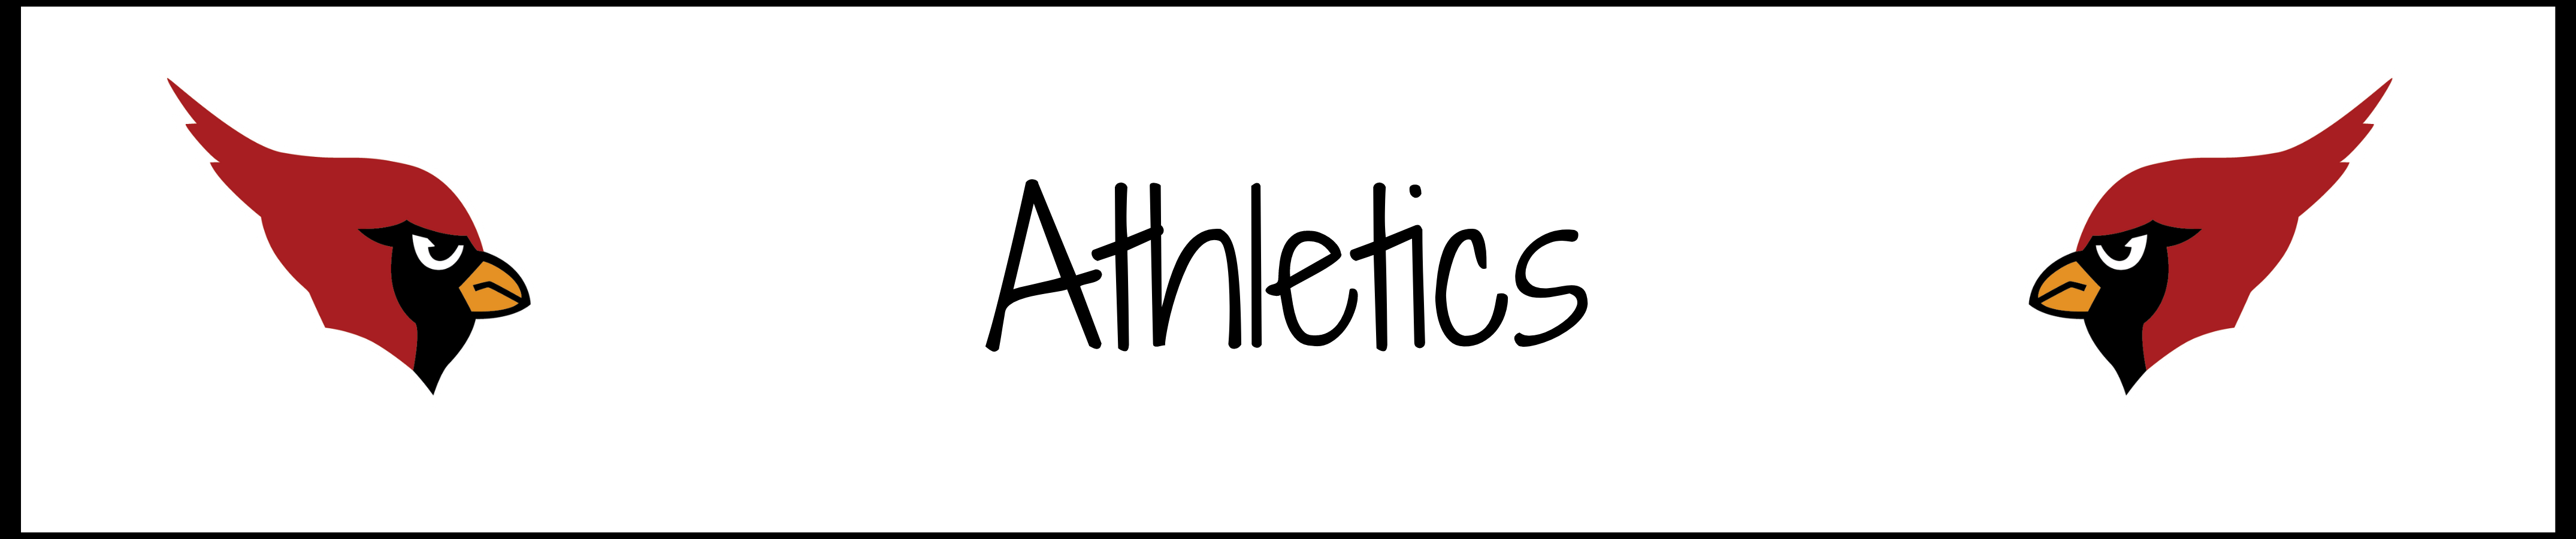 athletics